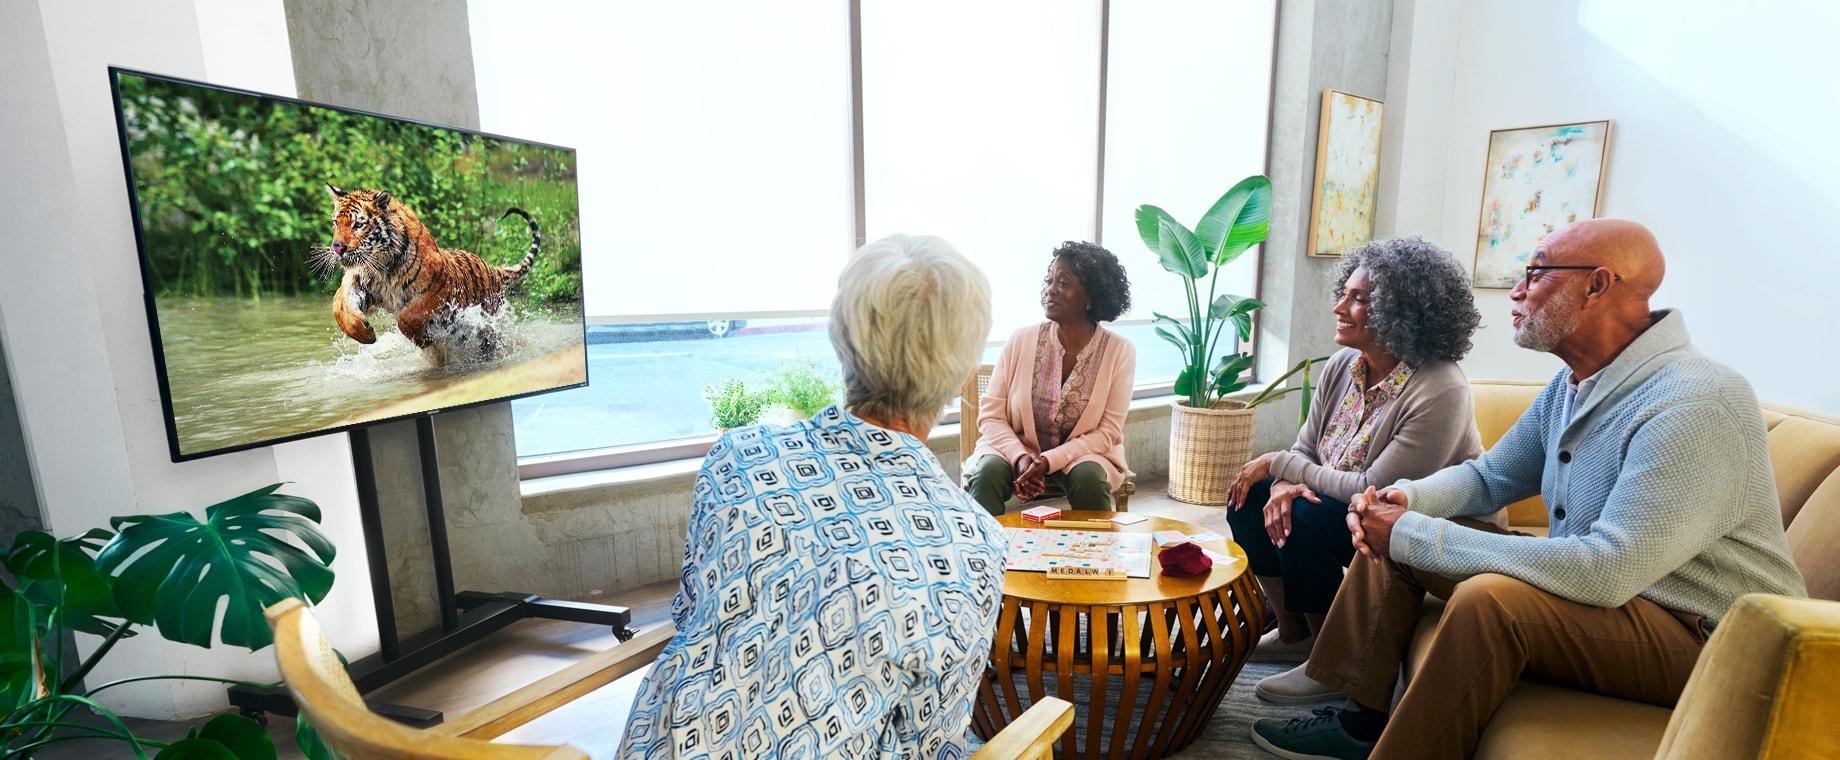  Directv seniors watching TV in community room